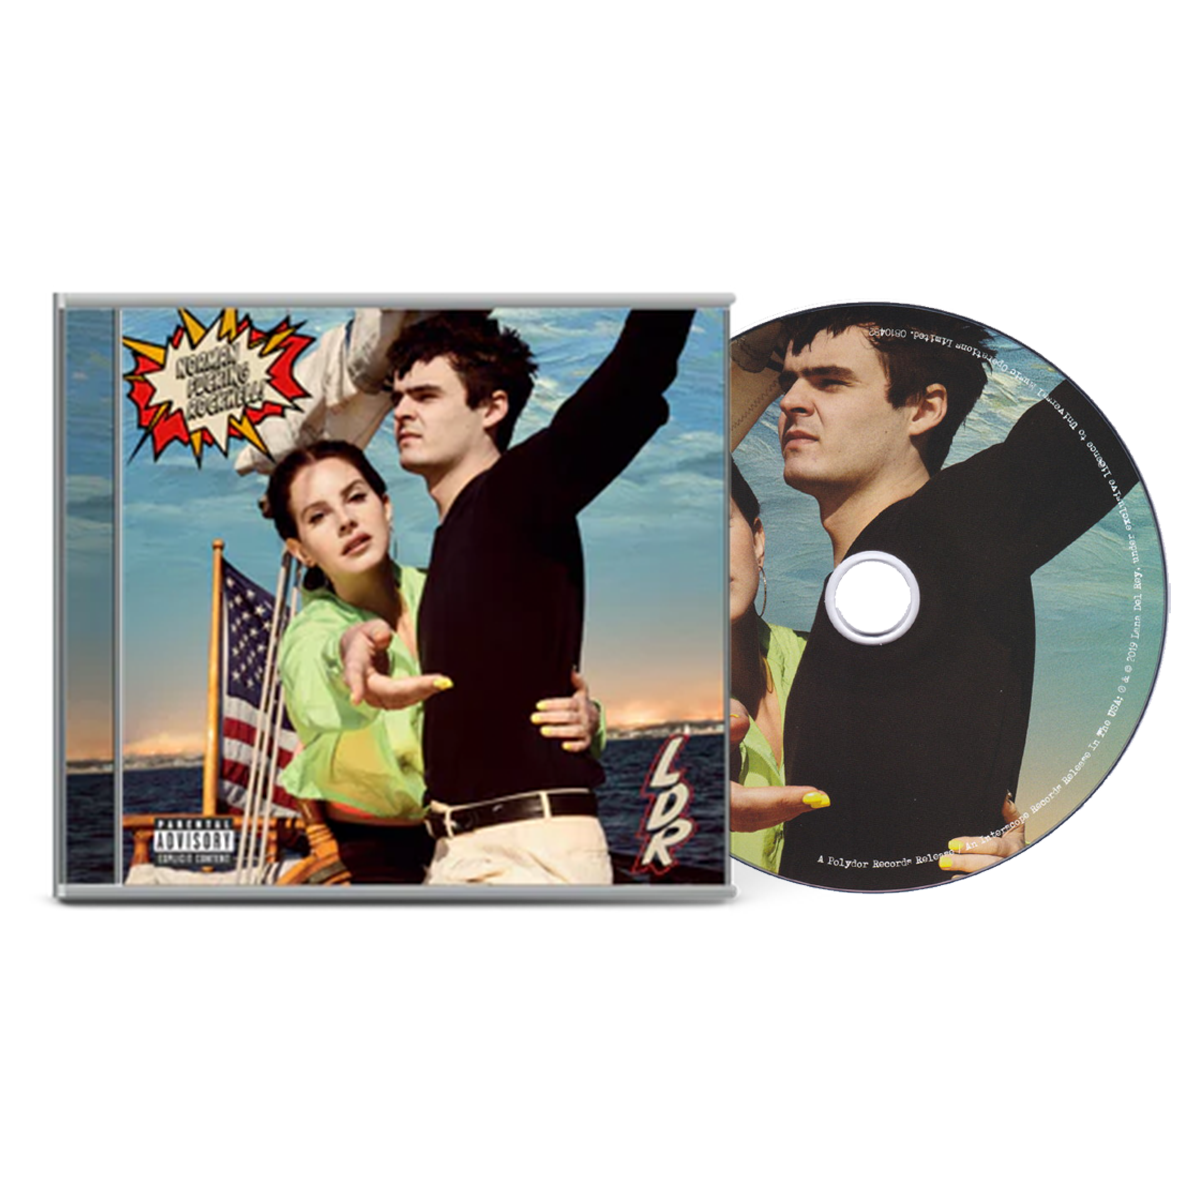 Lana del Rey - Norman Fucking Rockwell! CD